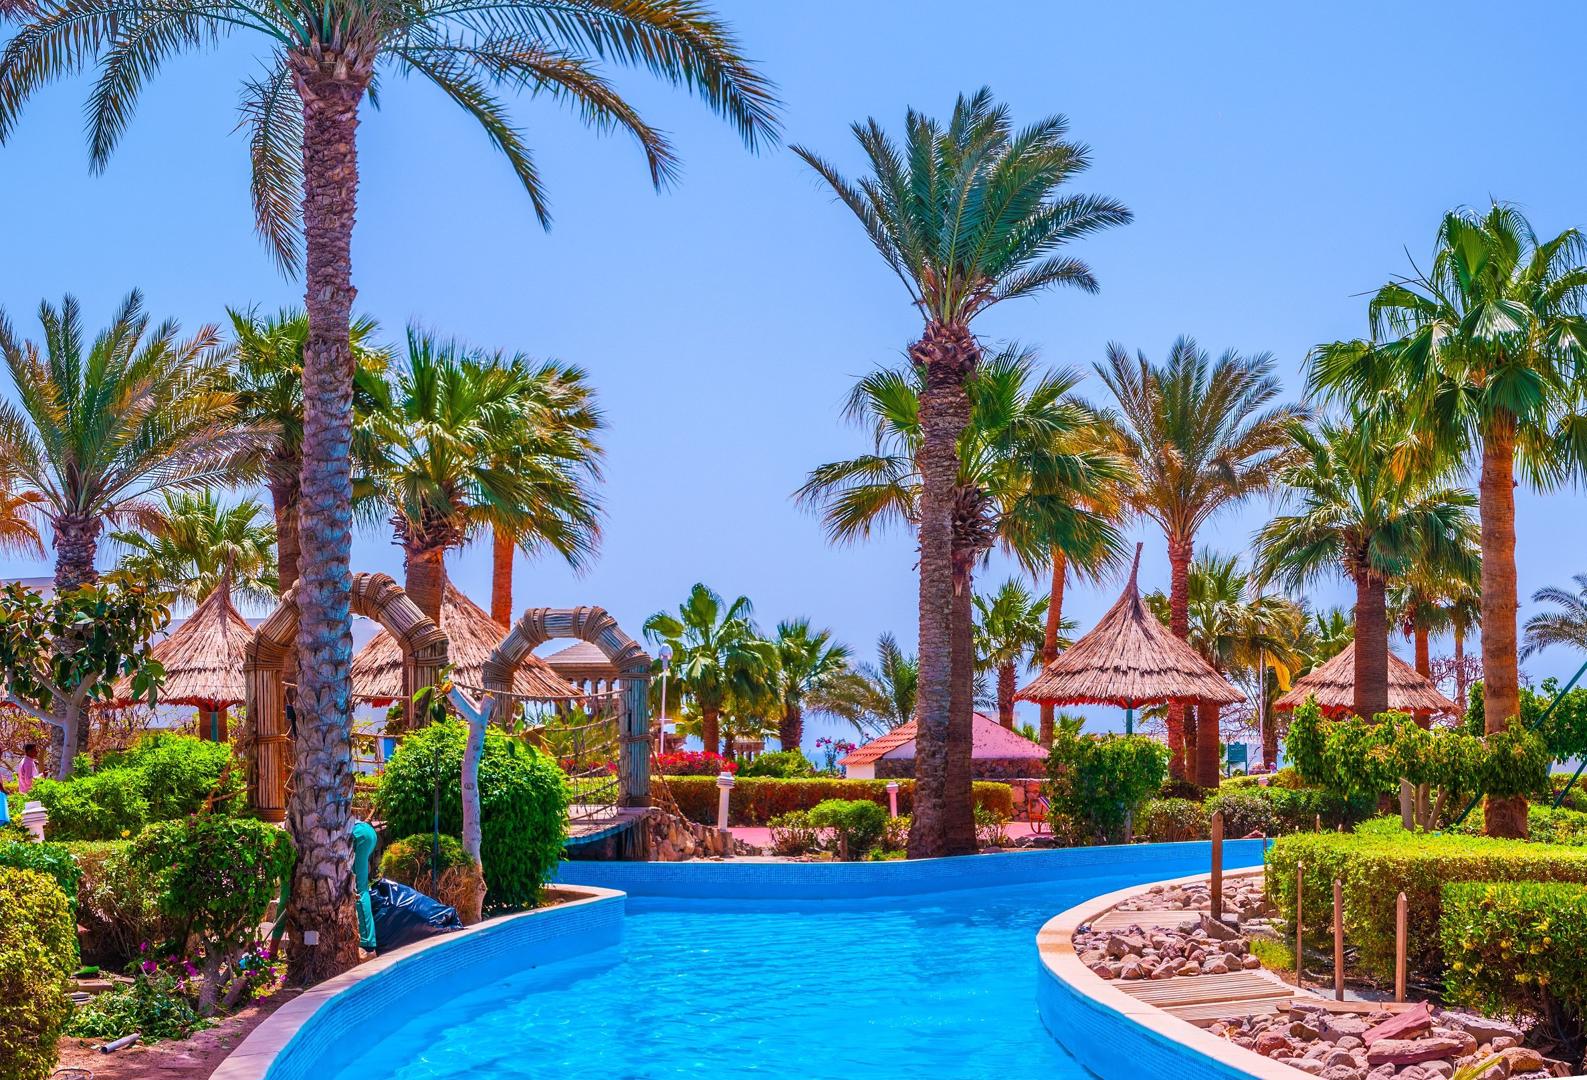 Maritim Jolie Ville Golf en Resort - Sharm El Sheikh - Egypte